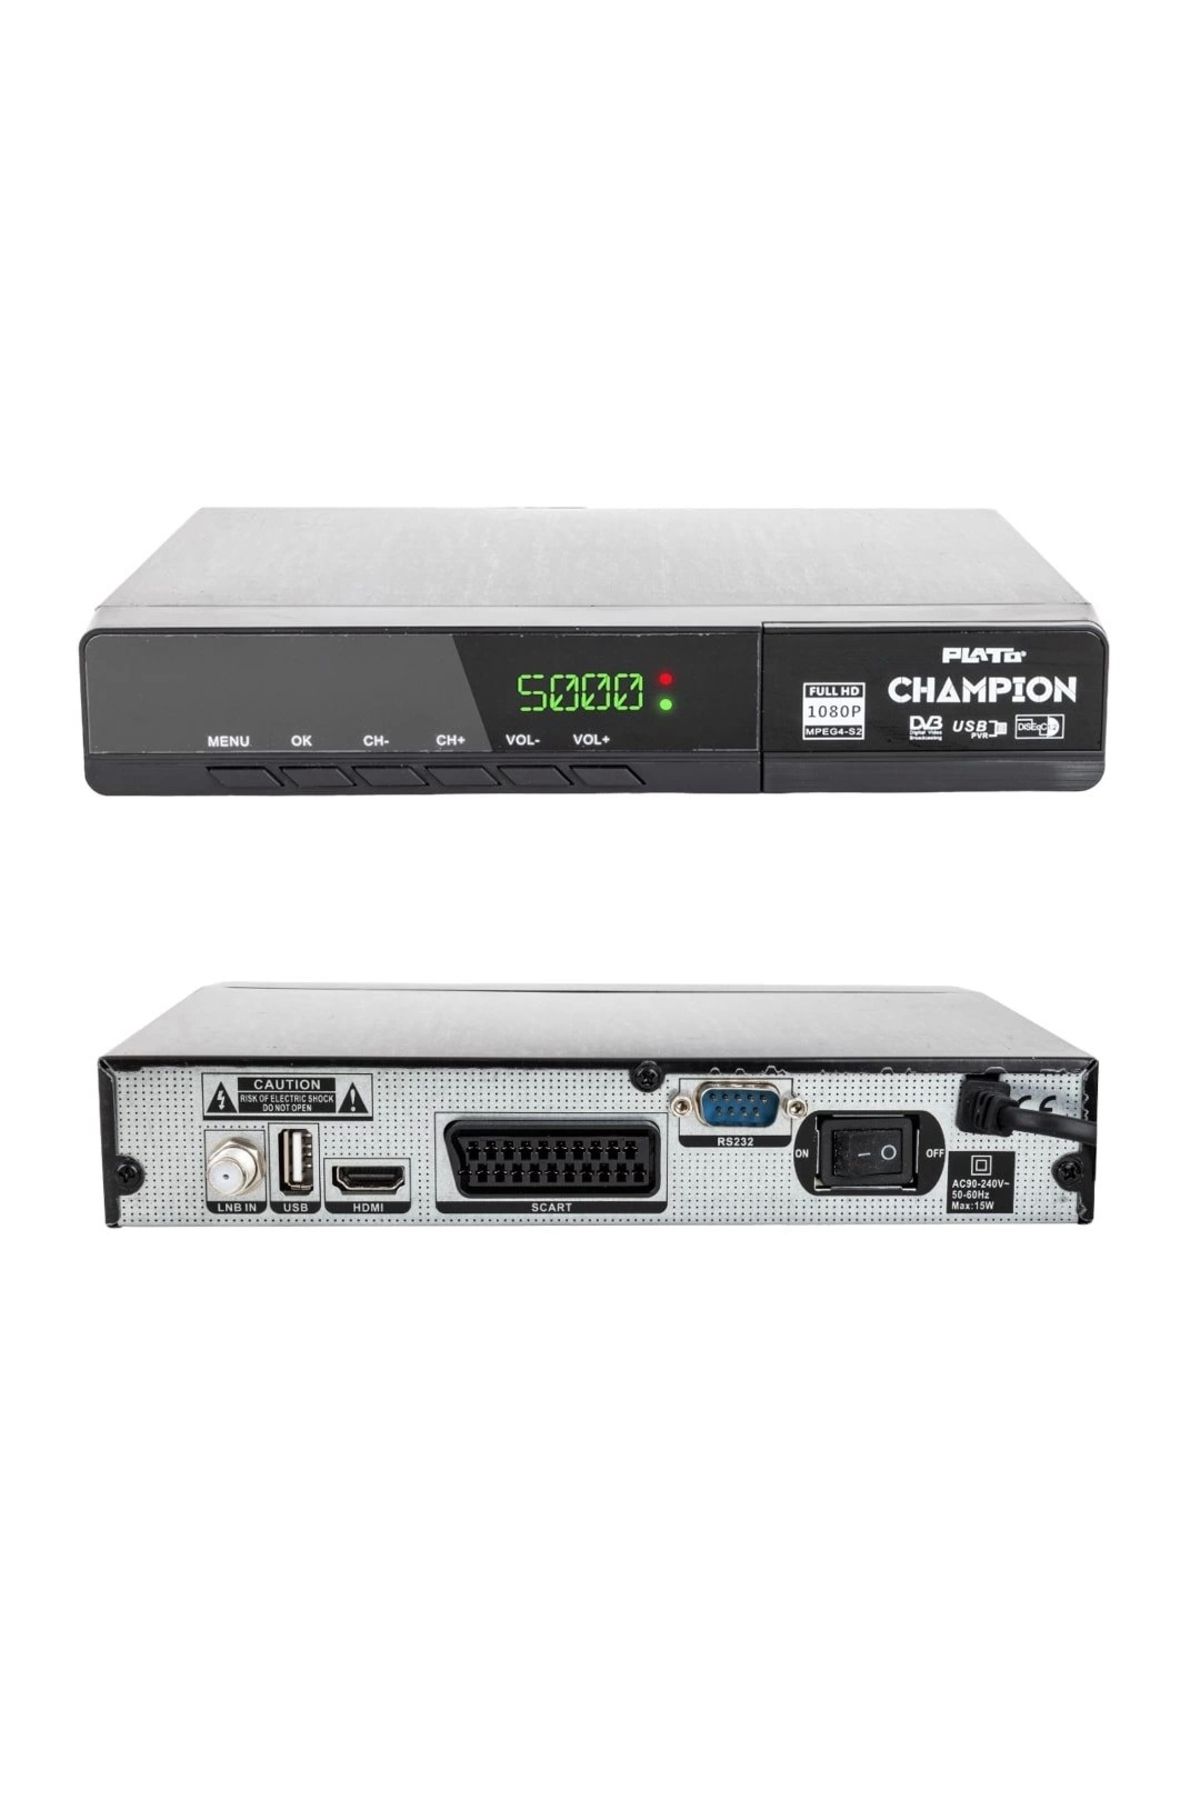 Genel Markalar Clz192 Plato Champıon Kasalı Full Hd Uydu Alıcısı (SCART HD)(HDMI KABLO DAHİL) (4172)